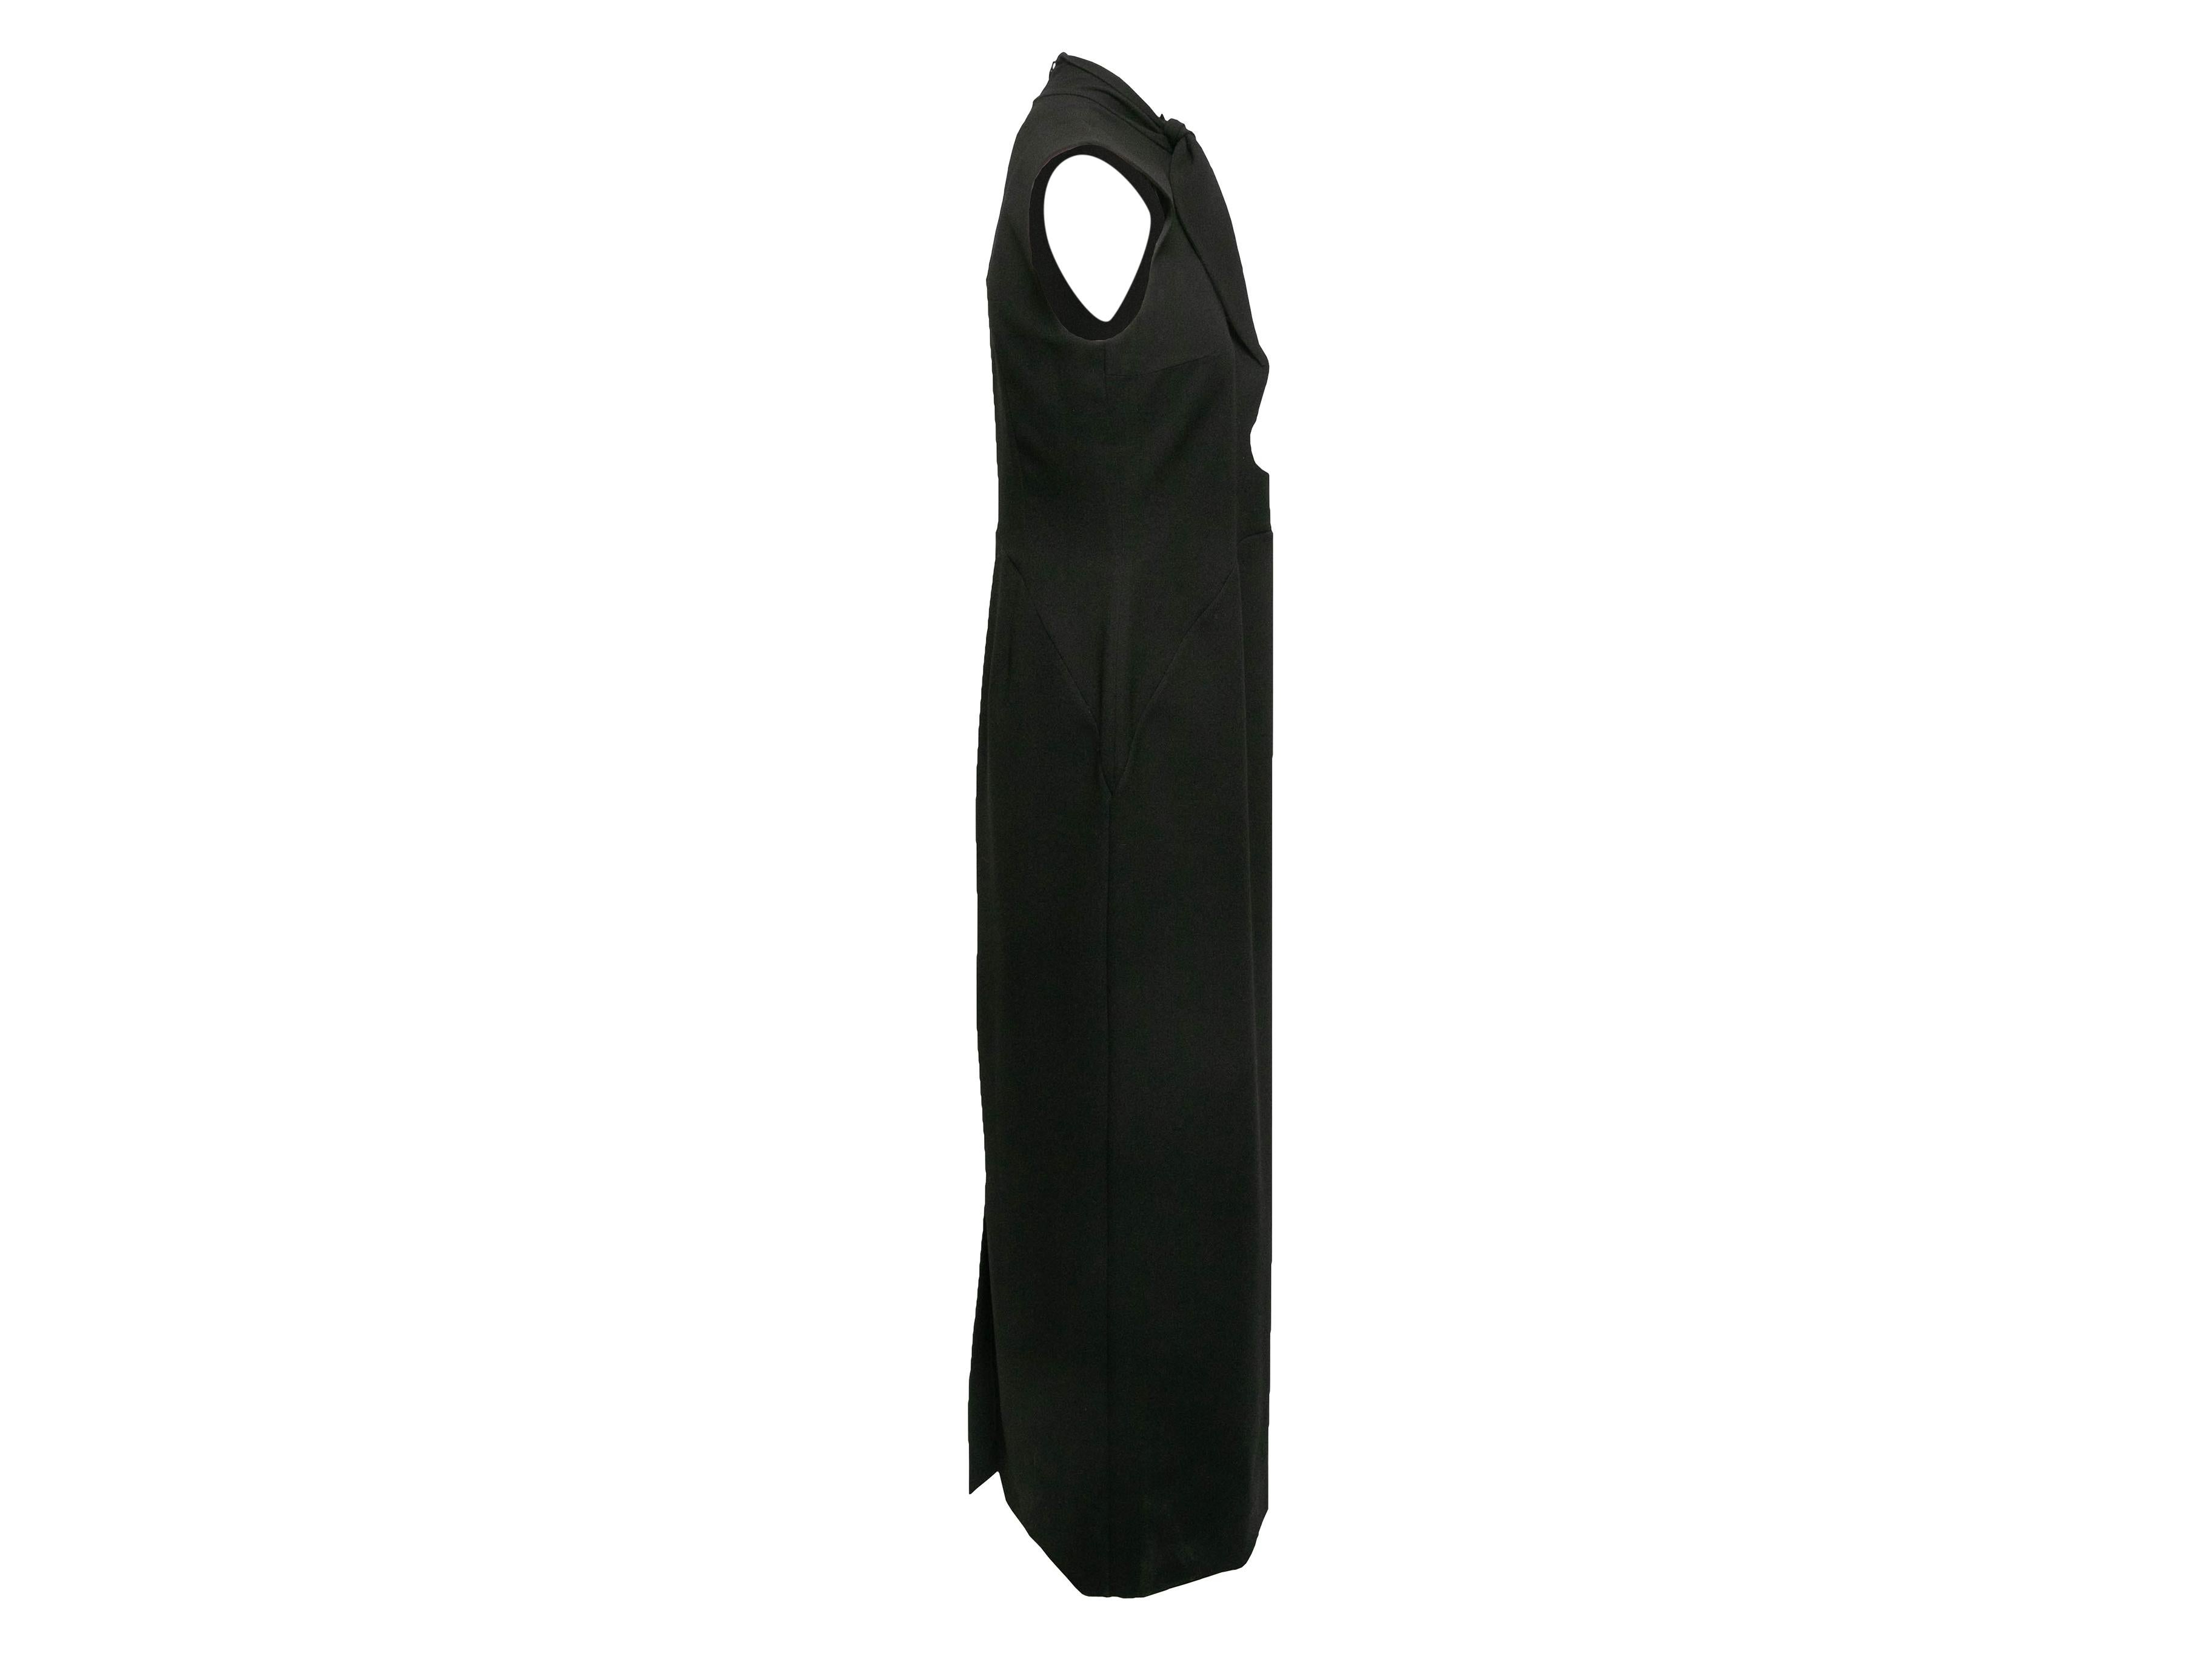 Black cutout Kamaria sleeveless dress by Roksanda. Tie accent at front neckline. Zip closure at back. 34